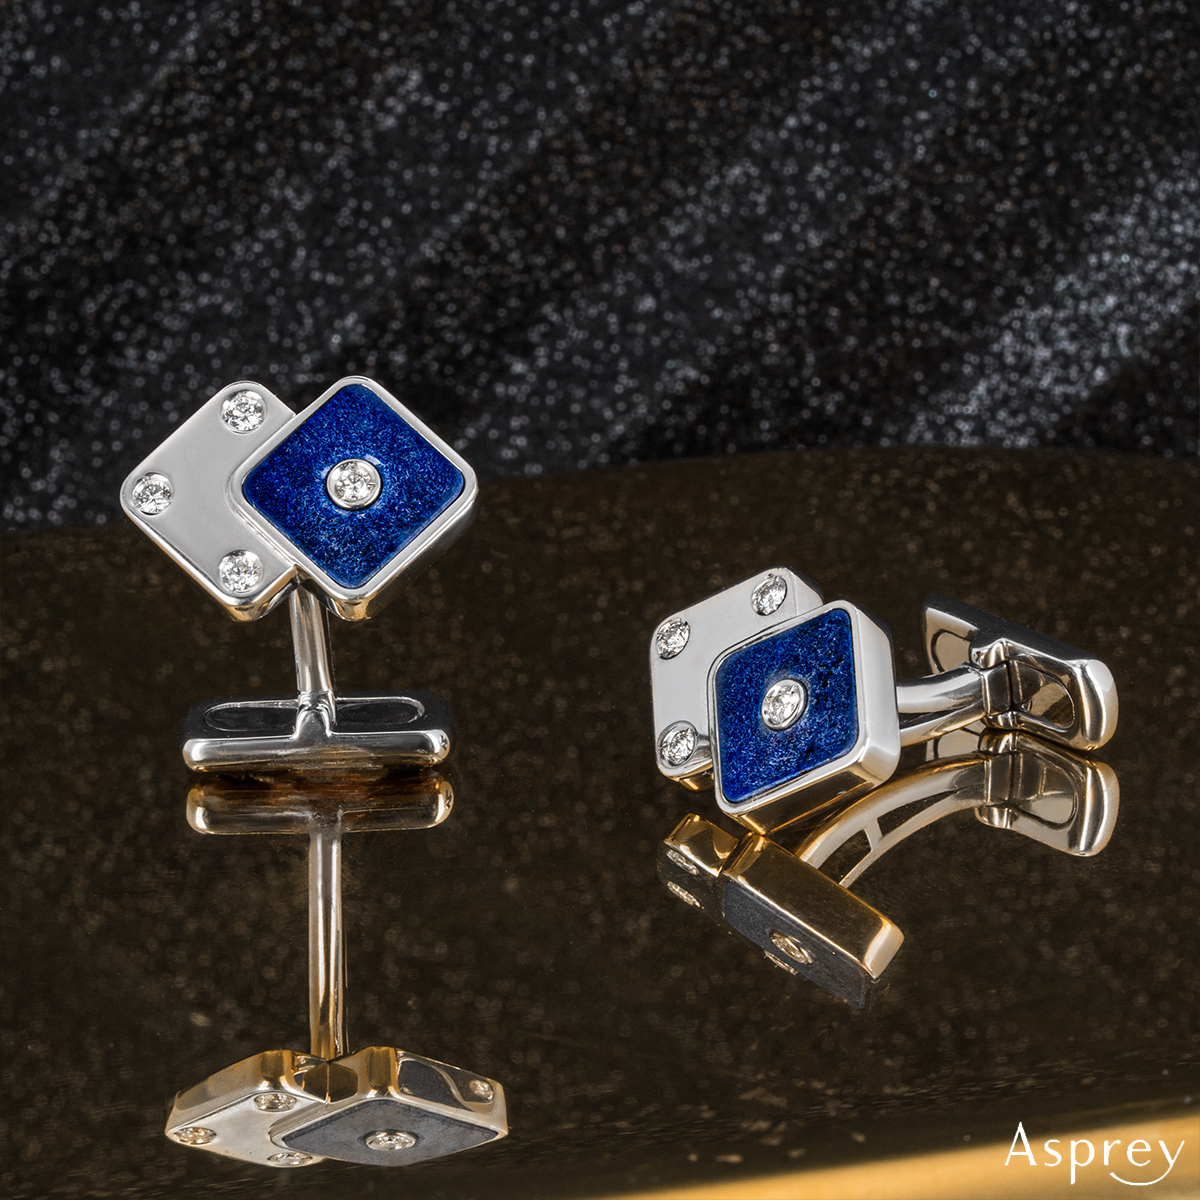 Asprey White Gold Lapis Lazuli & Diamond Cufflinks